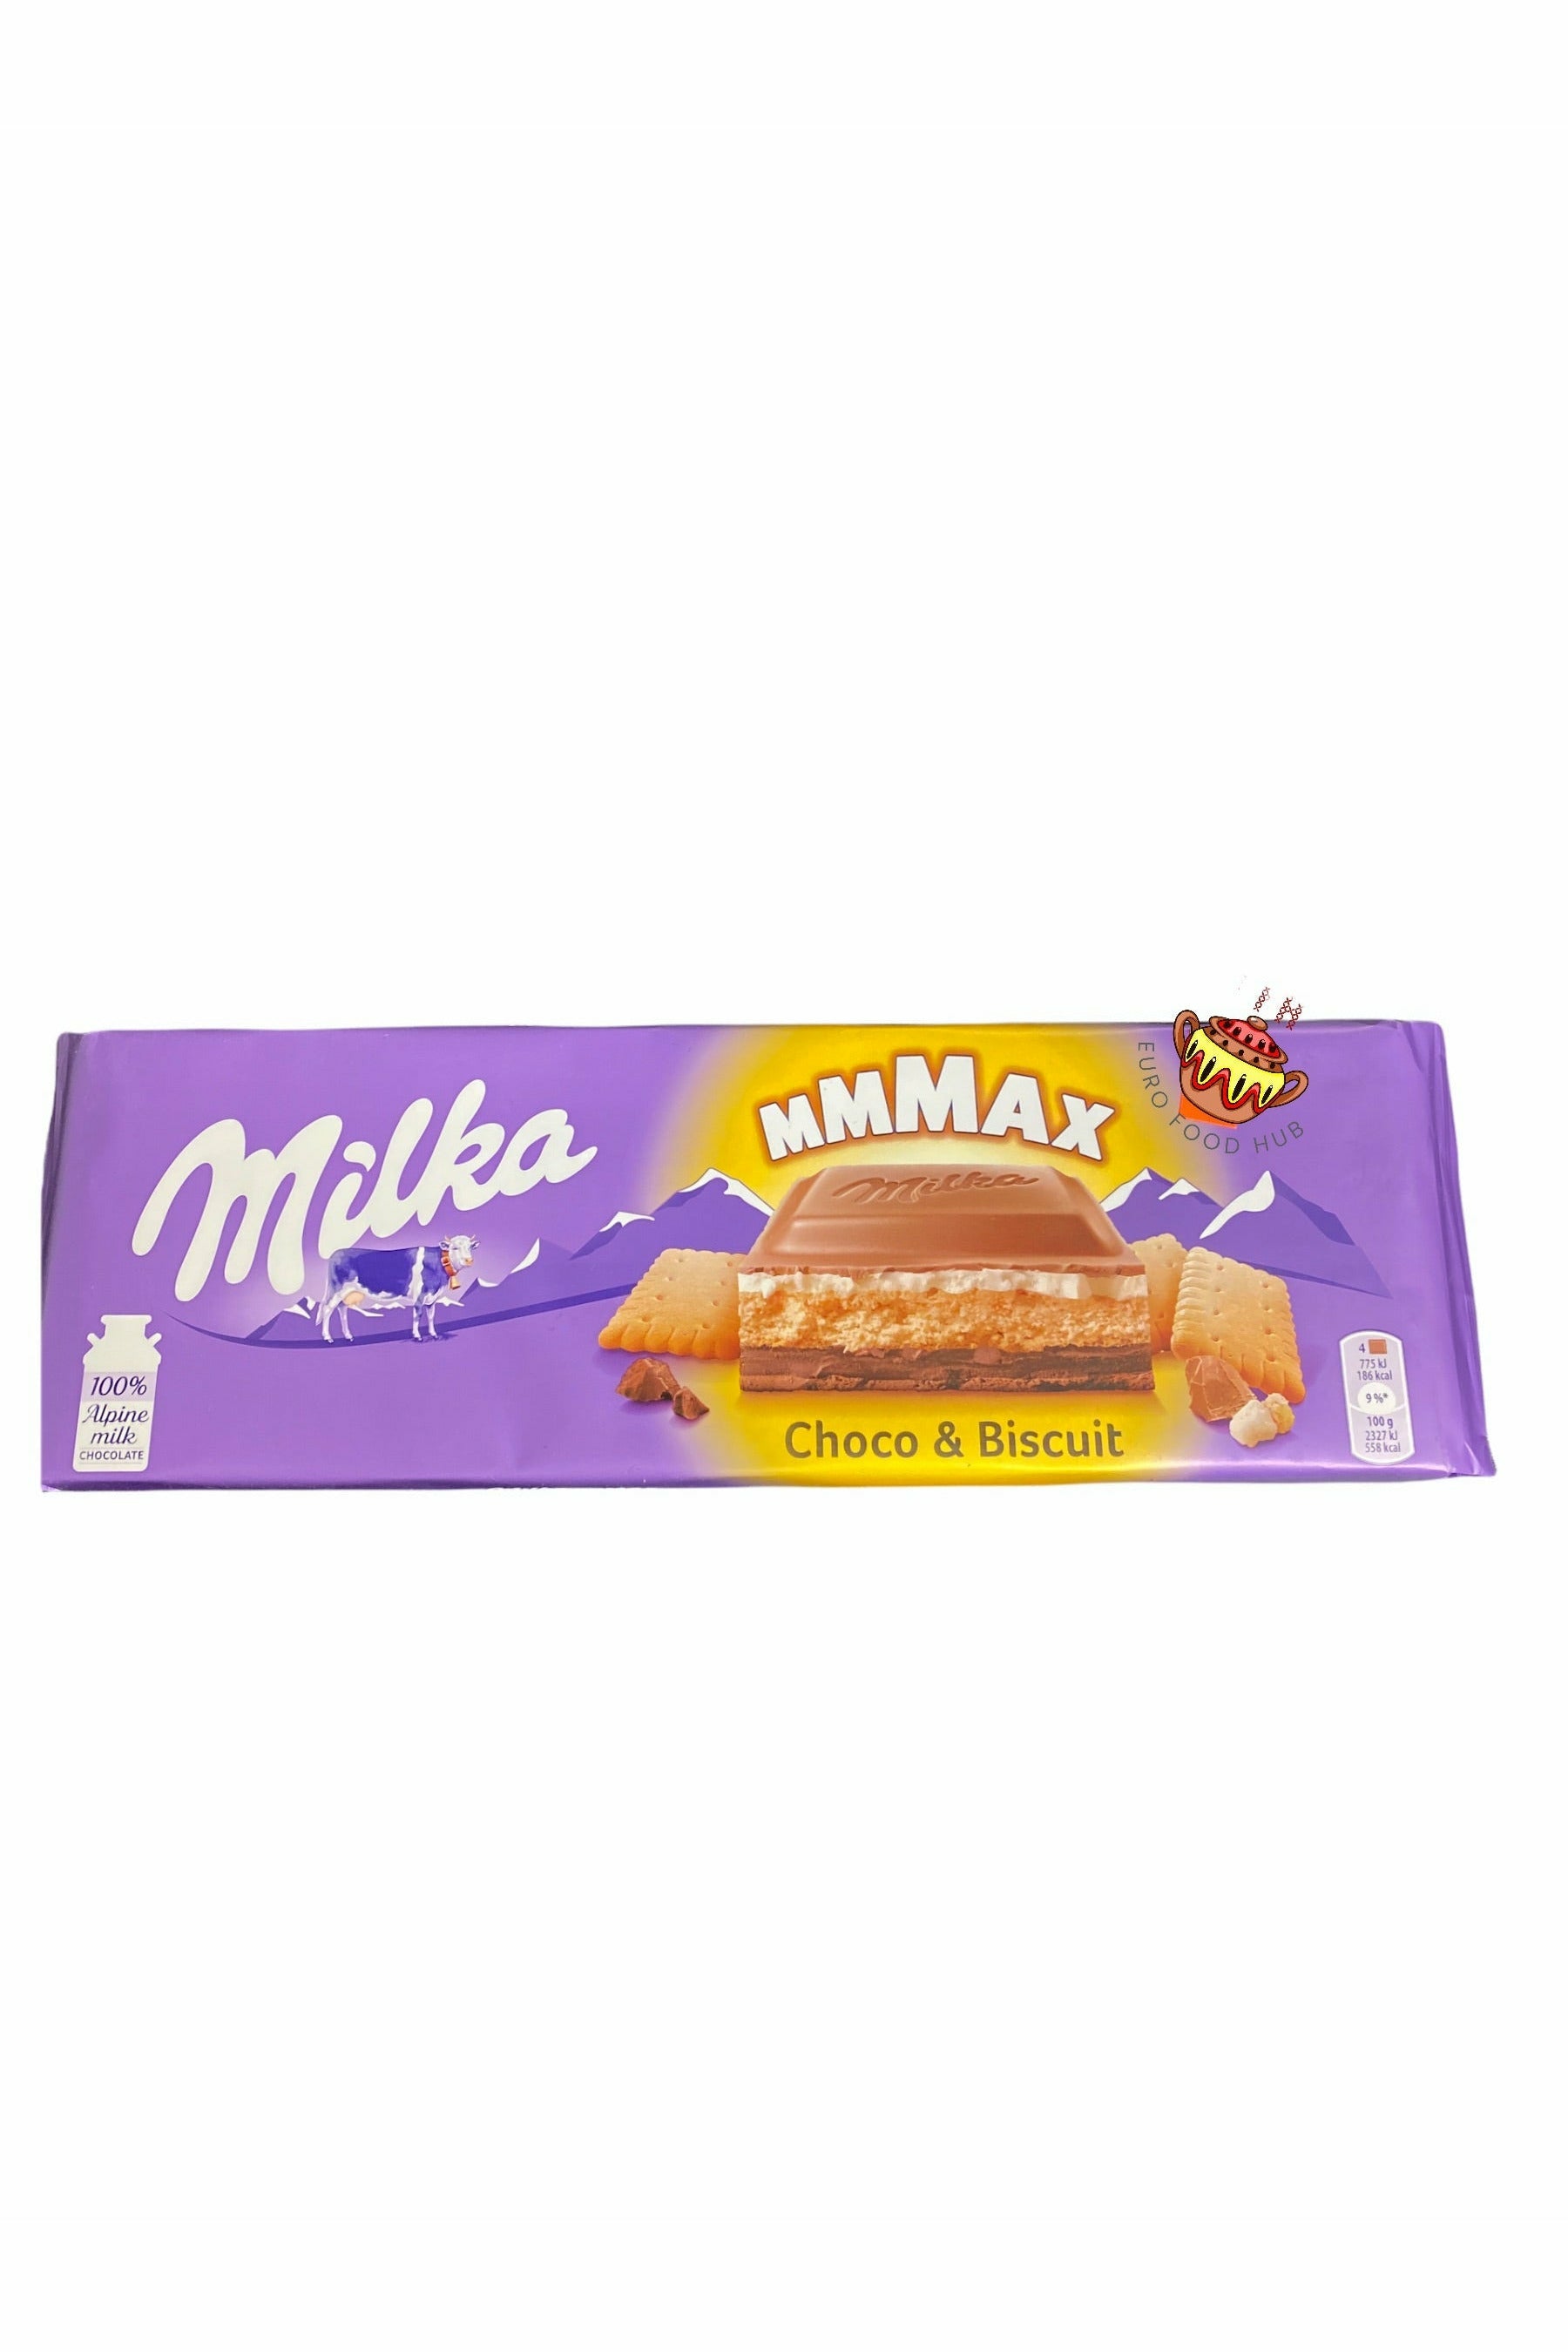 Milka Chocolate - Choco & Biscuit Max - 300g